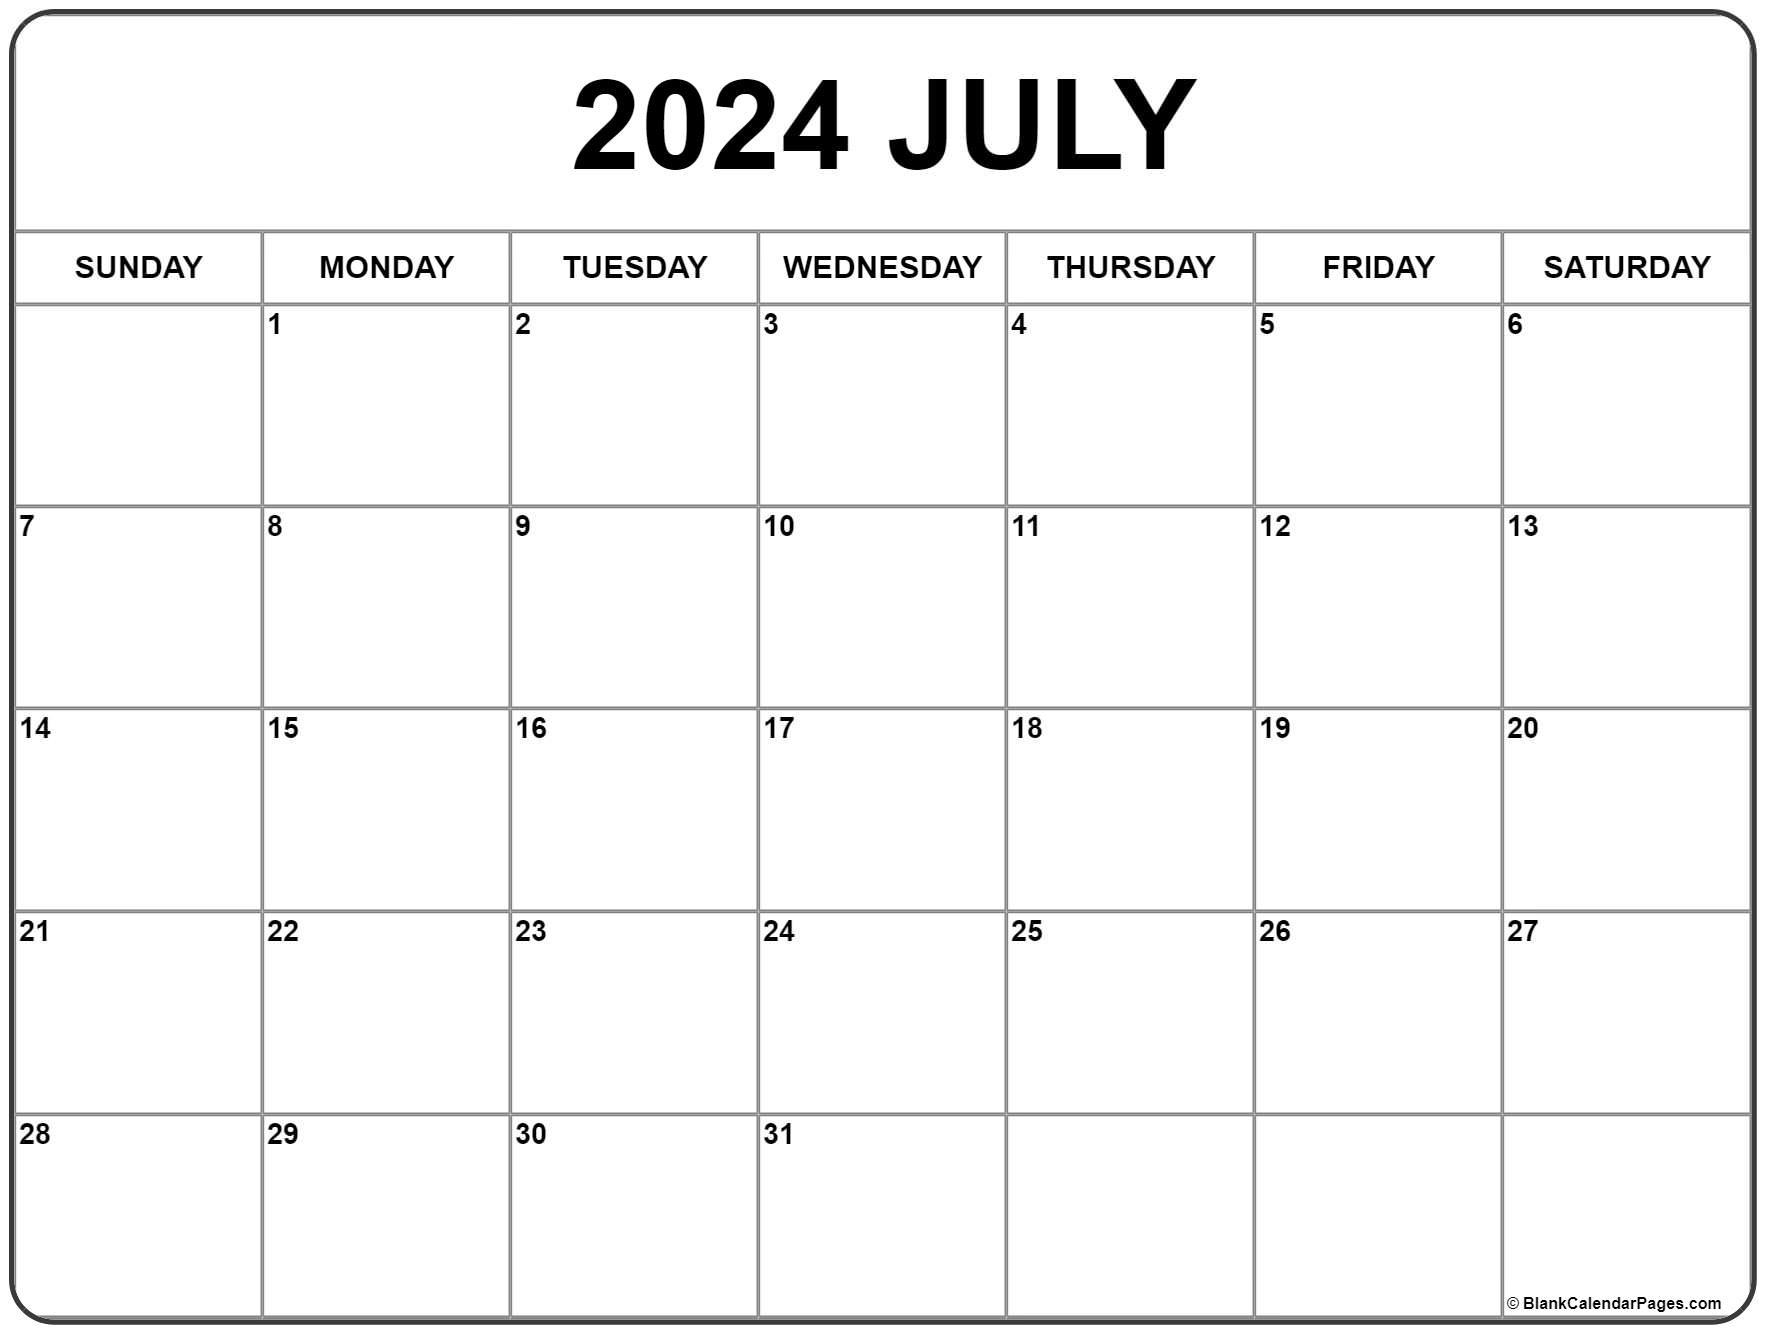 July 2024 Calendar | Free Printable Calendar within July 2024 Calendar Page